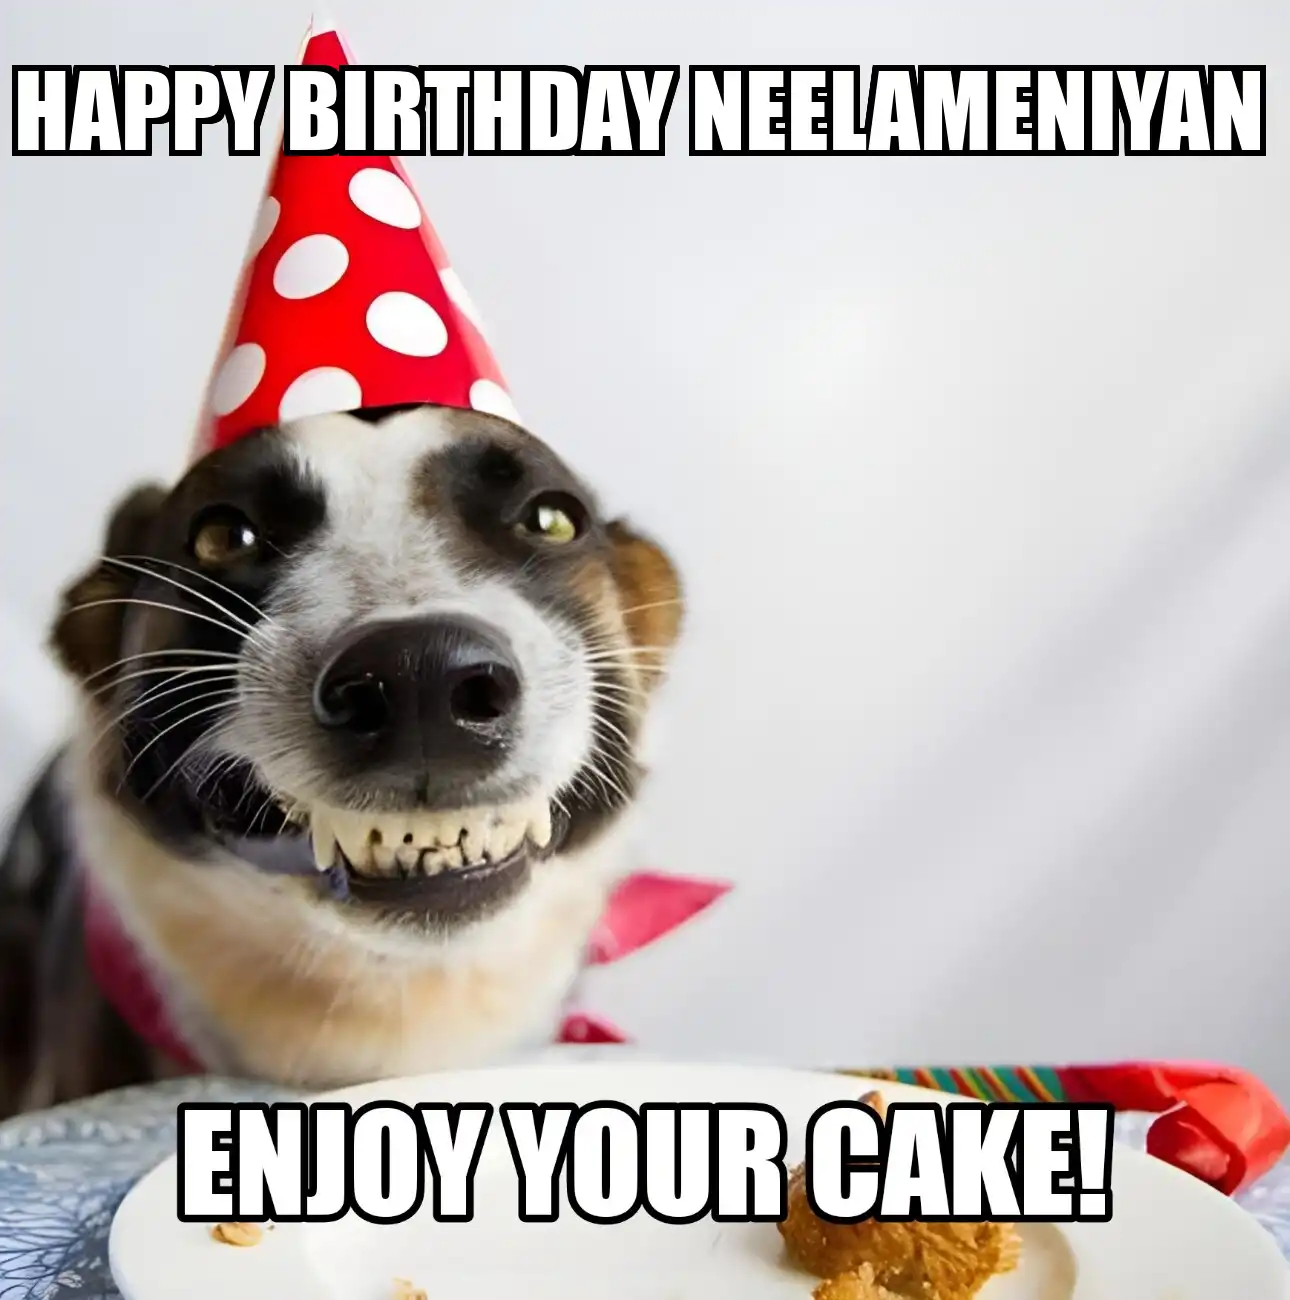 Happy Birthday Neelameniyan Enjoy Your Cake Dog Meme